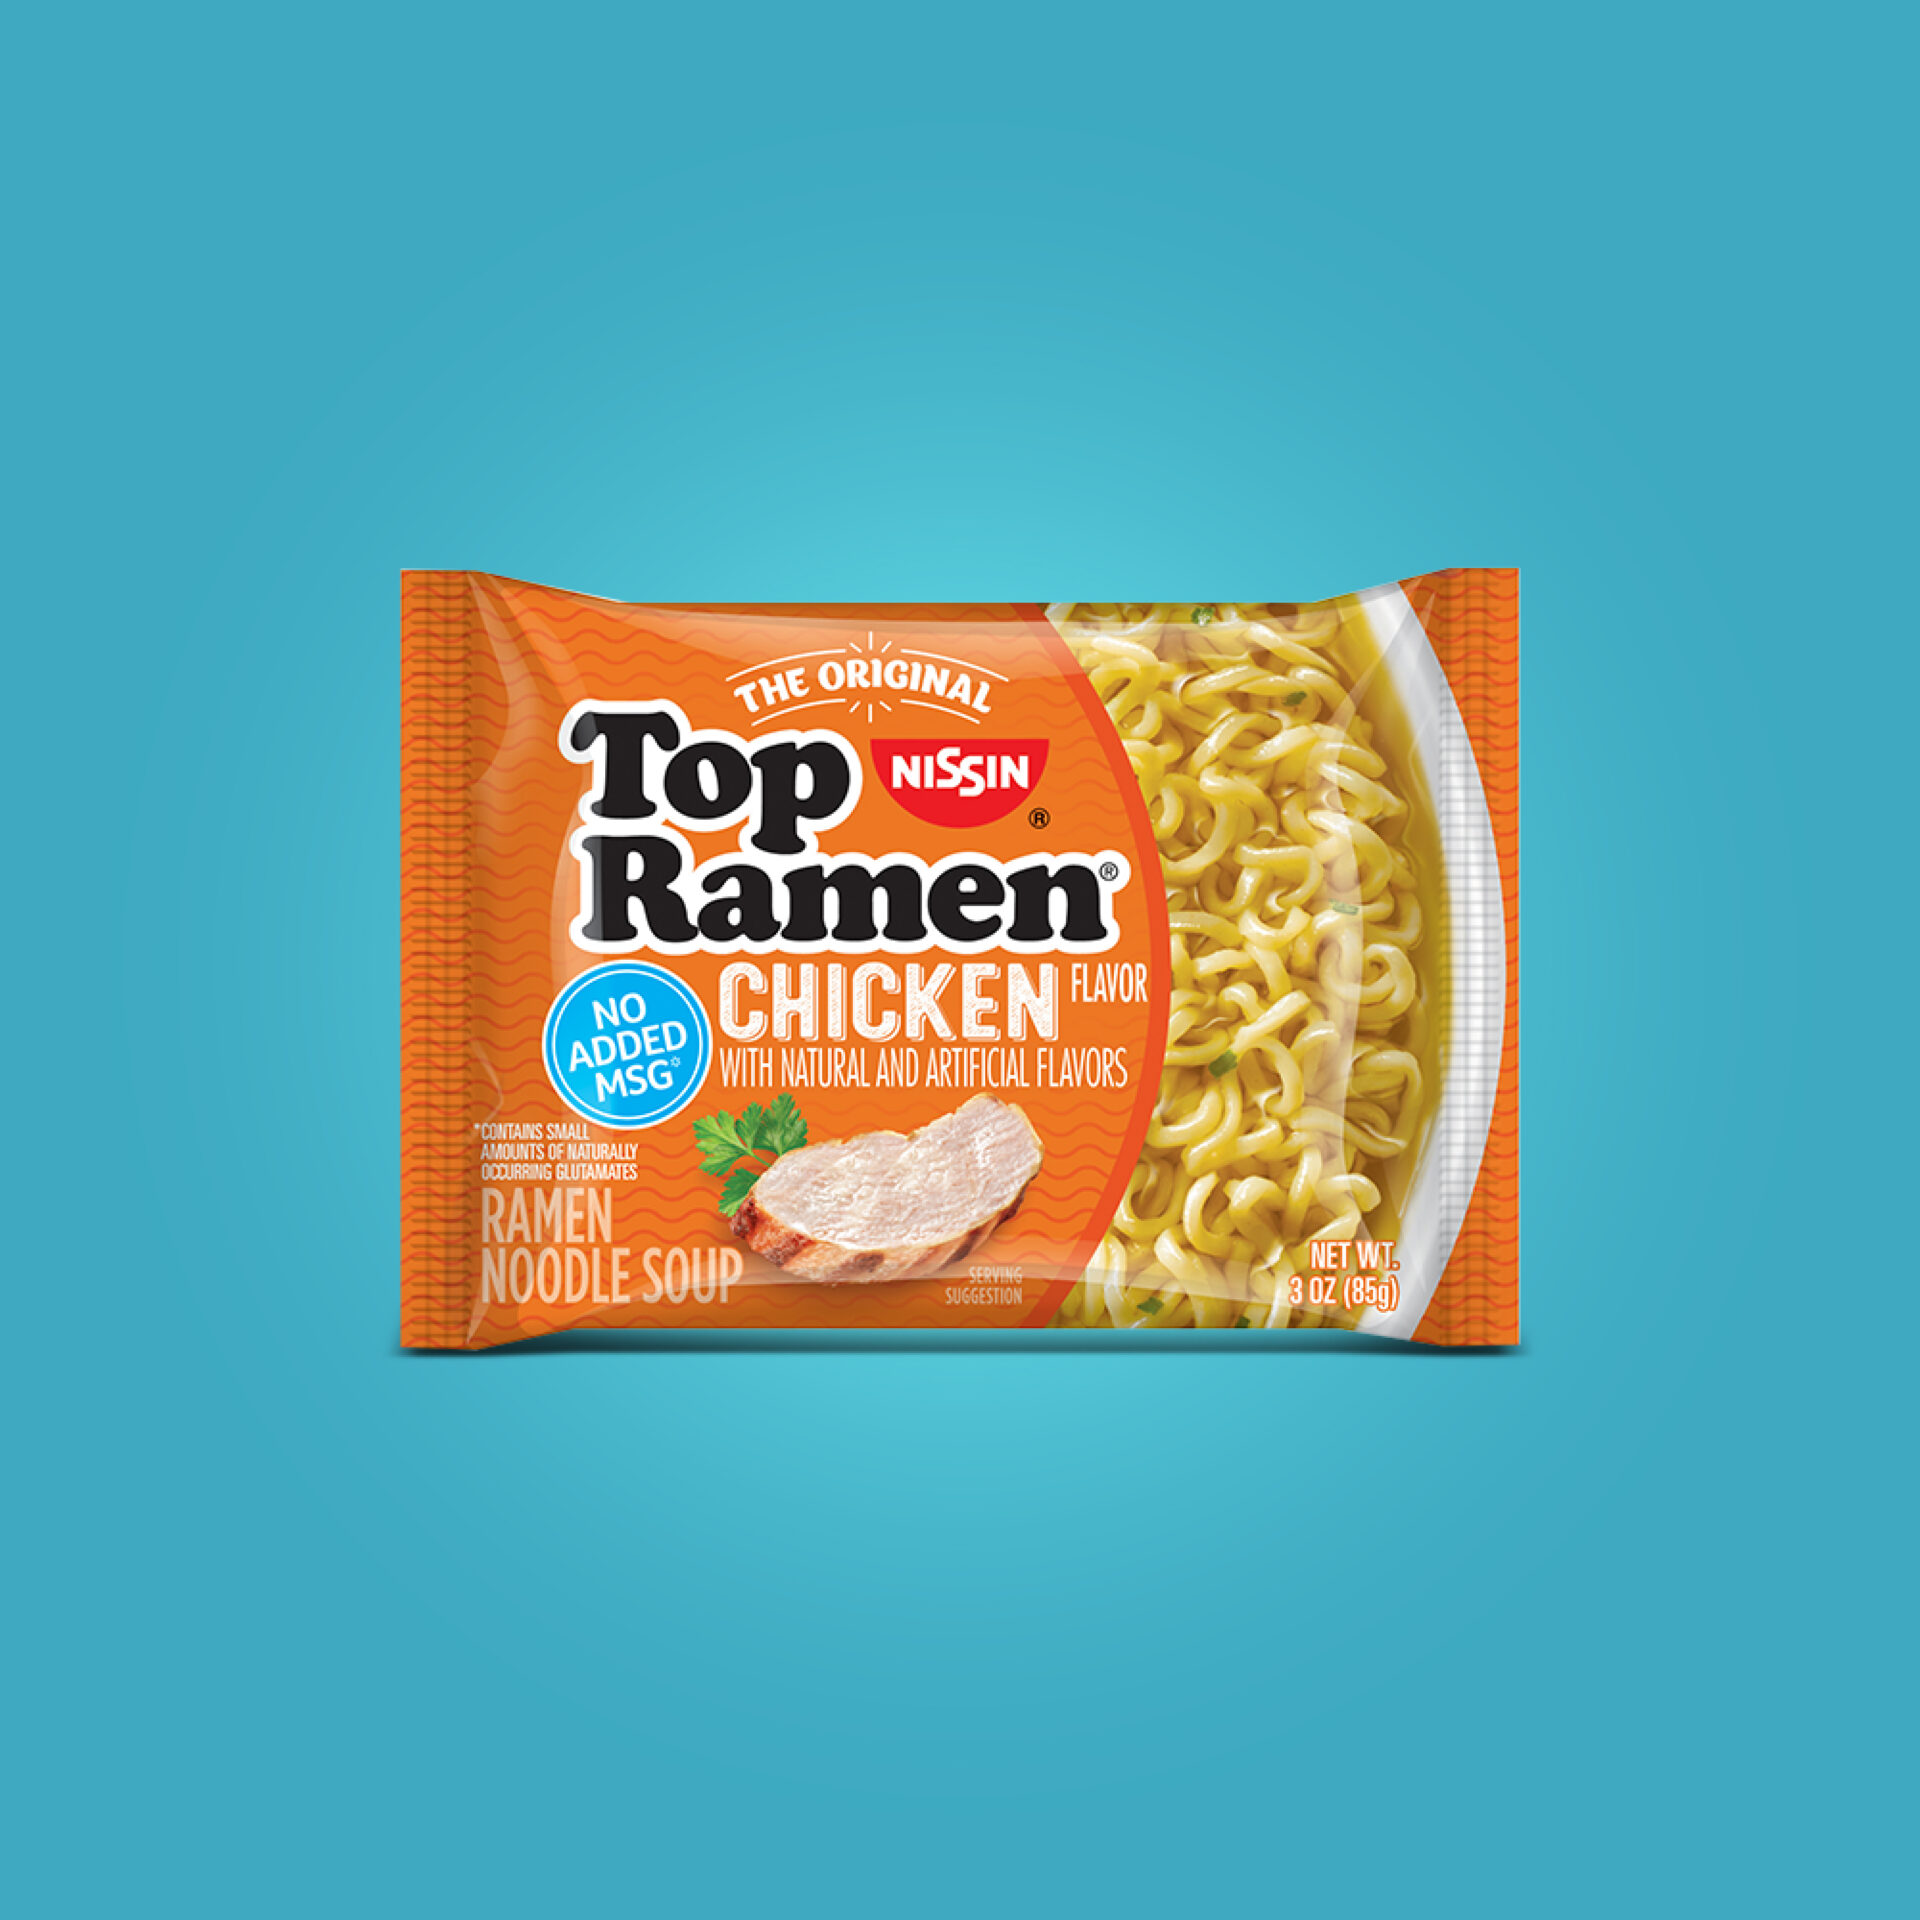 Original Top Ramen - Do you flavor your Nissin Top Ramen noodles